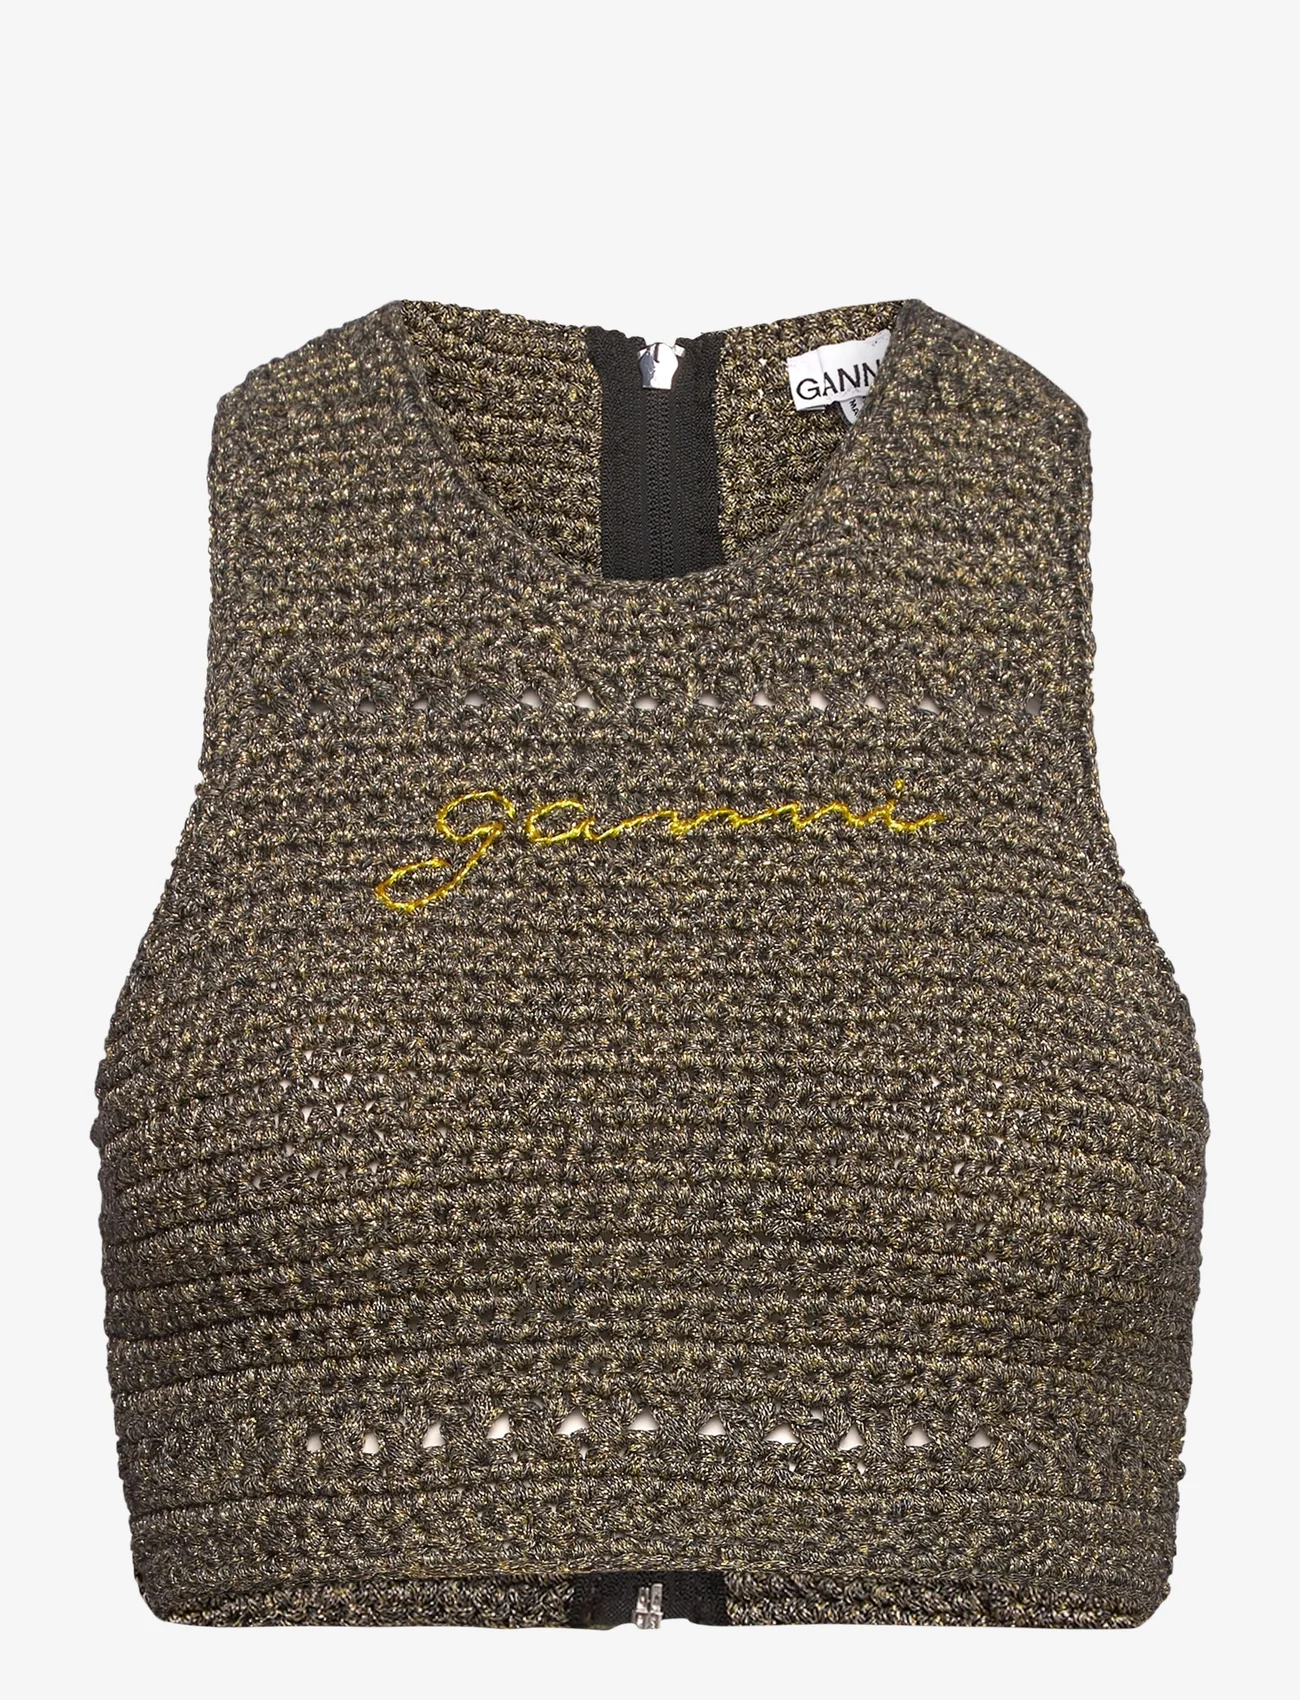 Ganni - Crochet Racerback Top - bandeau bikini - black/gold - 0